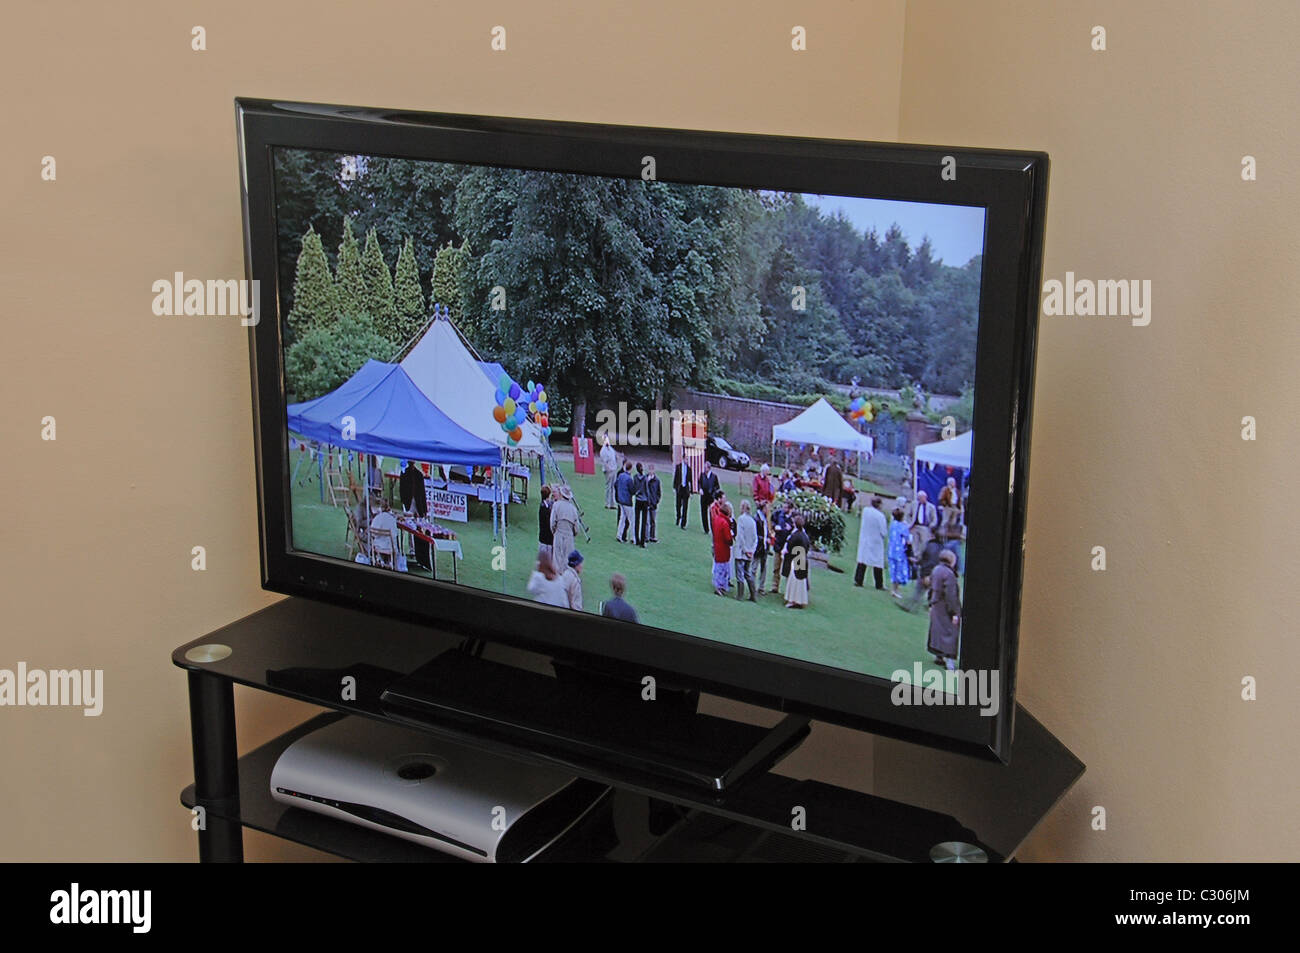 Breitbild-HD LCD-Fernseher. Stockfoto